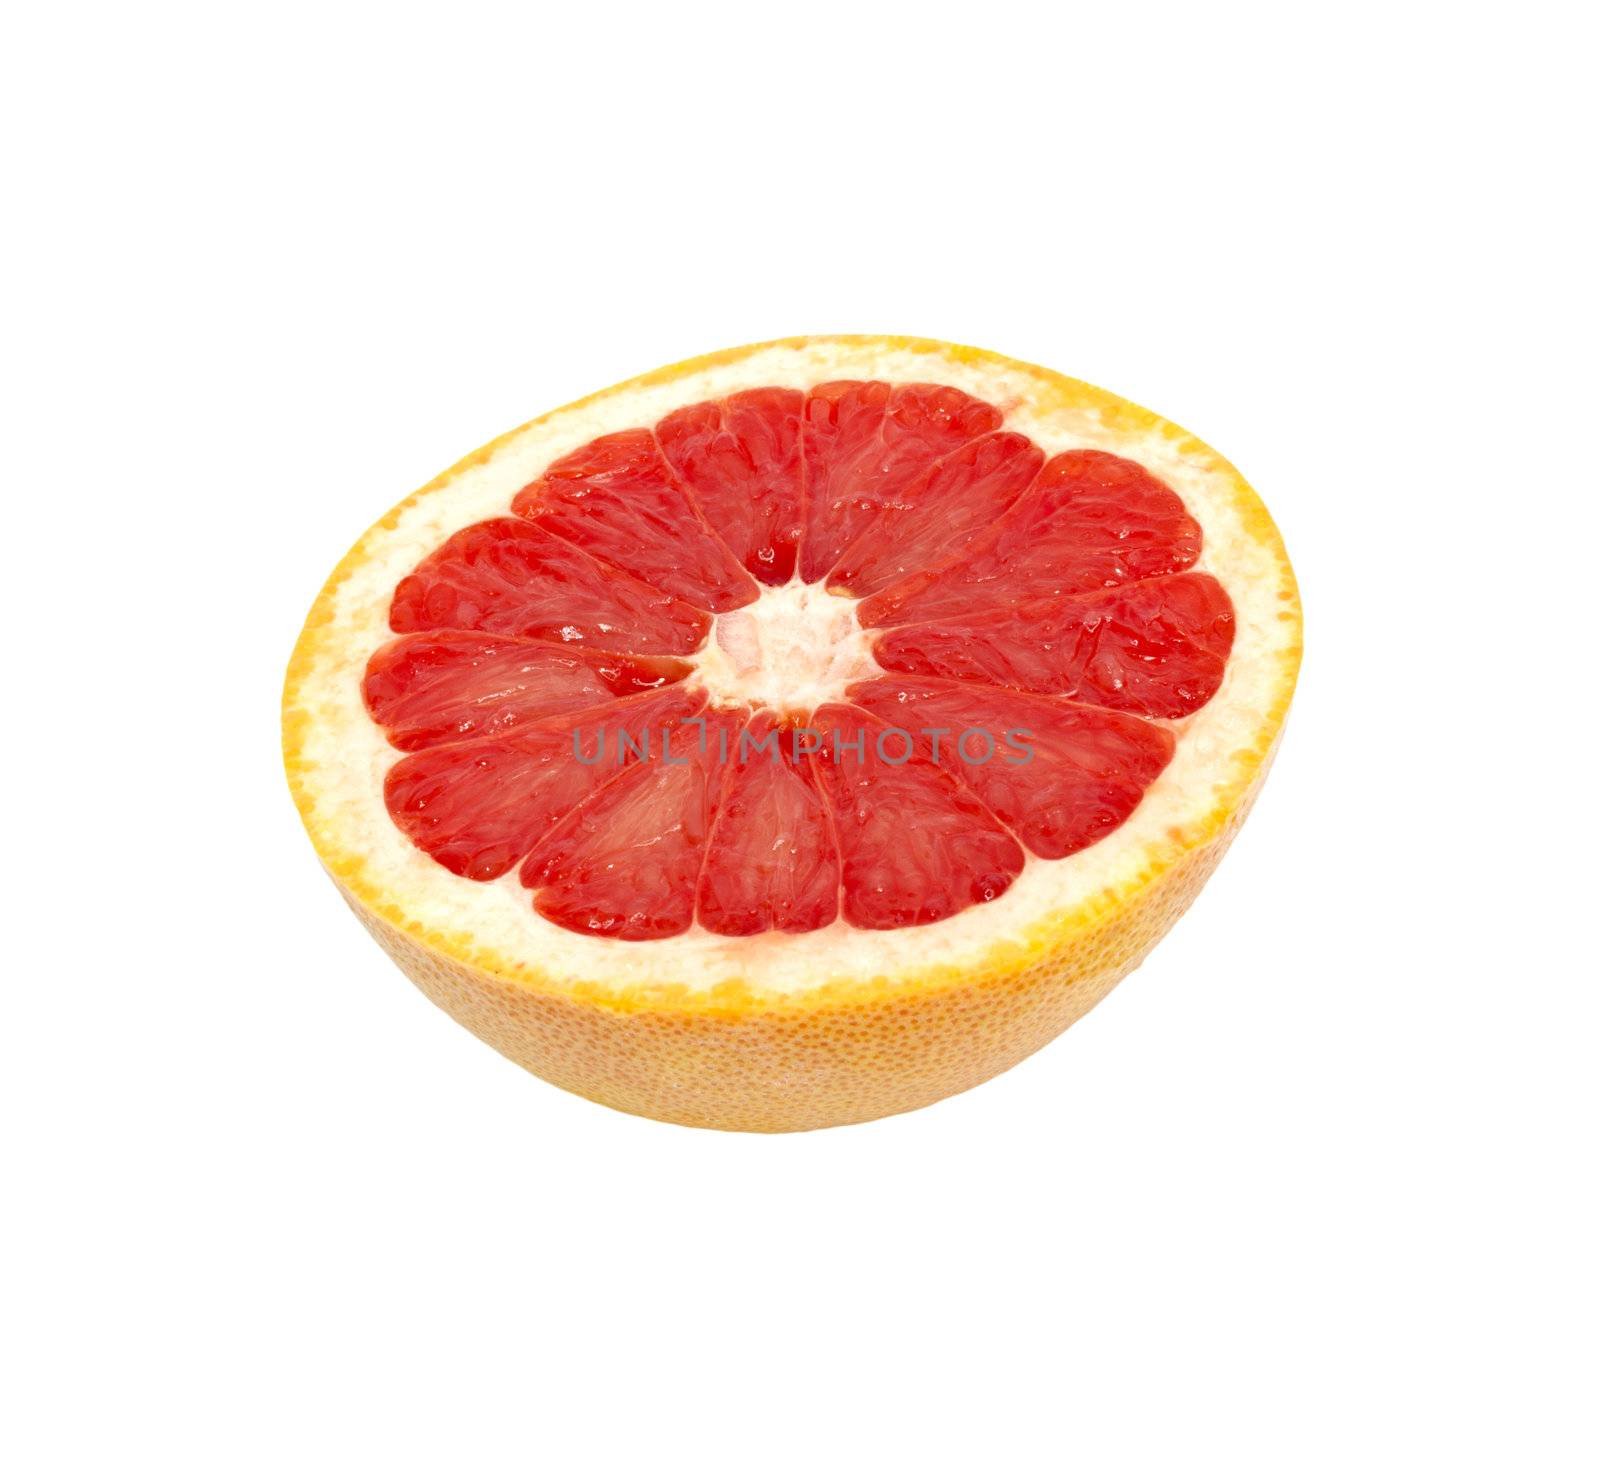 Red grapefruit close-up macro shot  by schankz